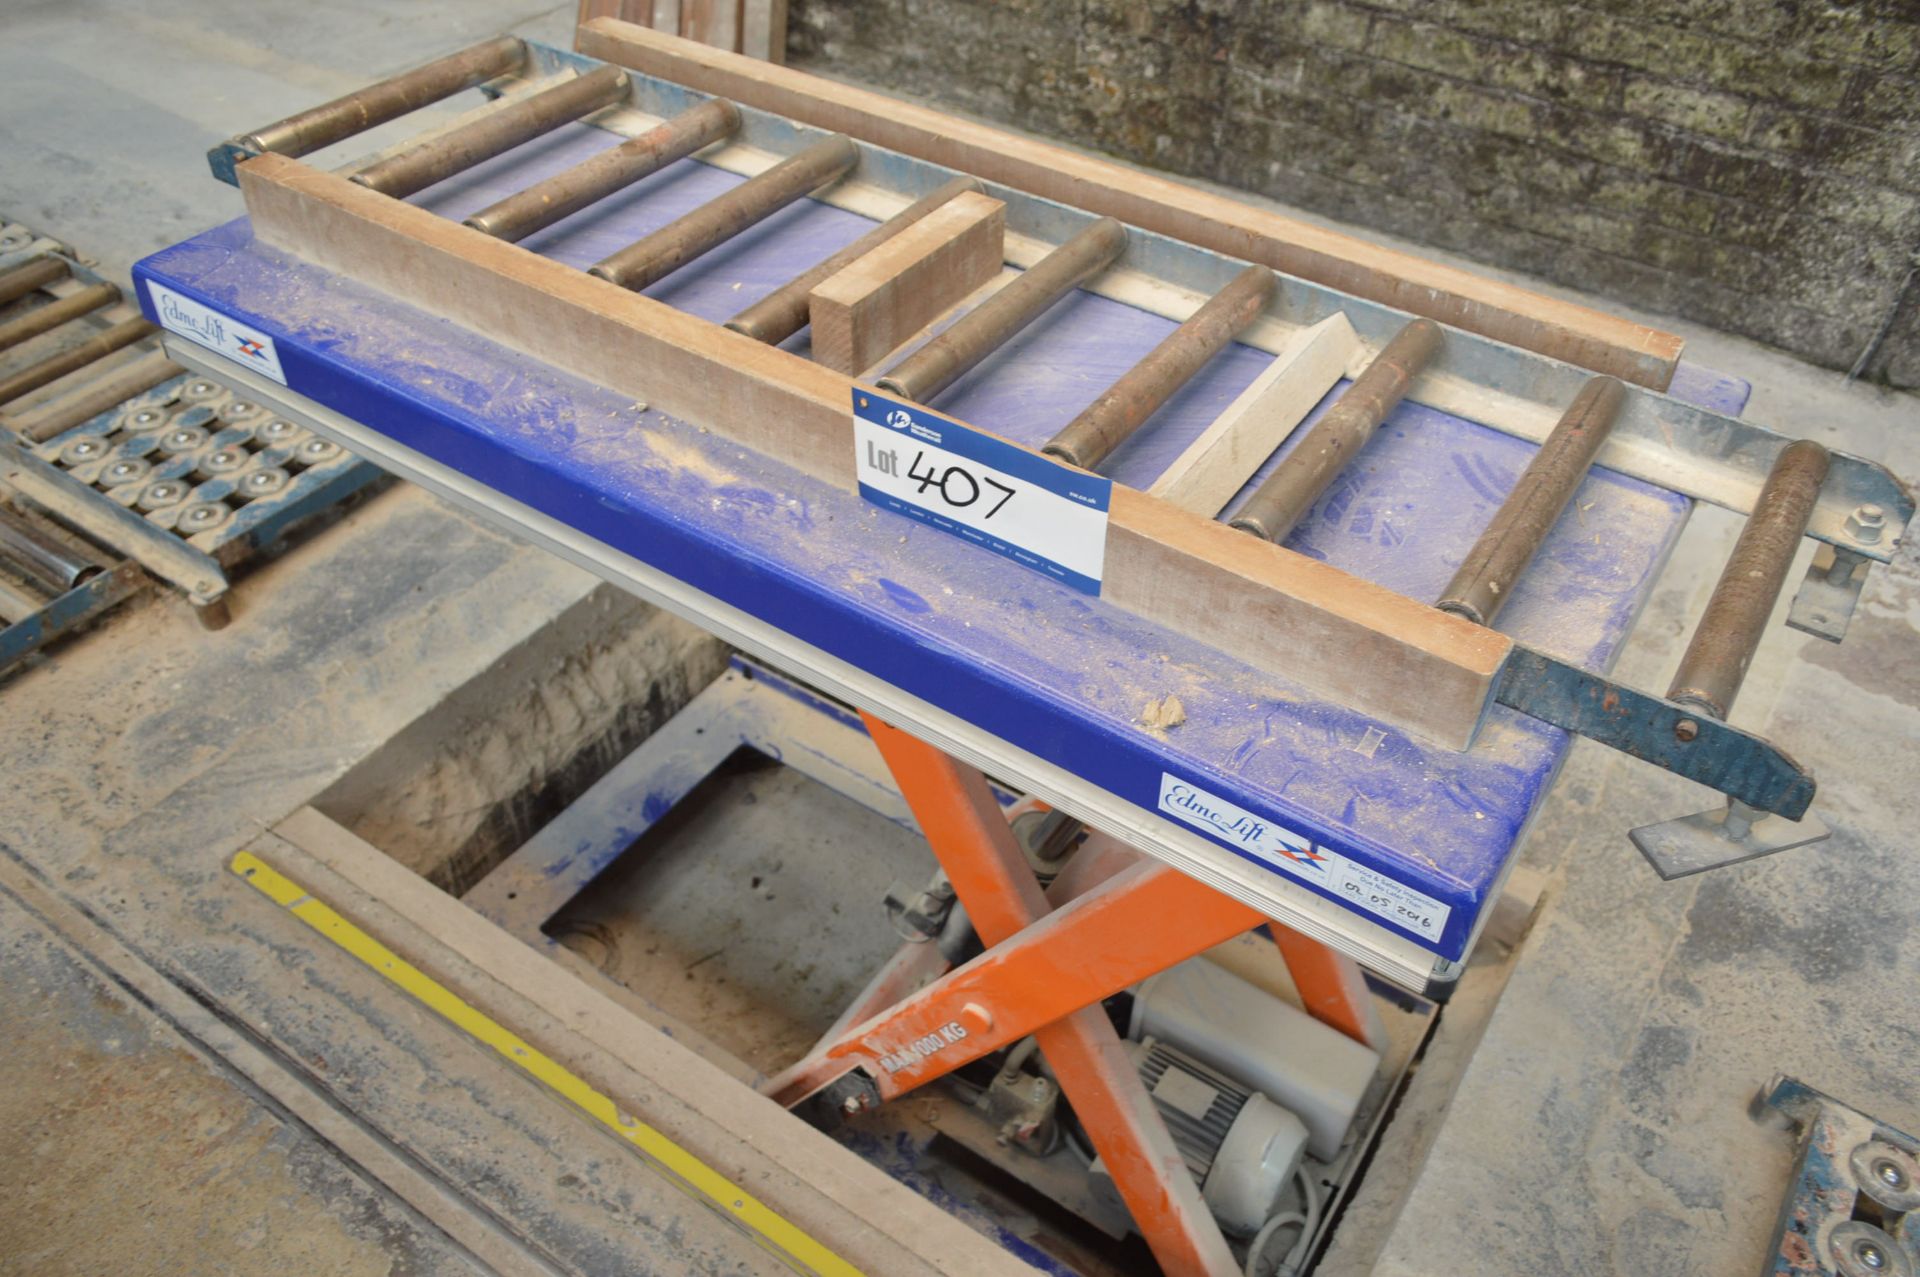 Edmo 1,000kg cap. Scissor Lift Table, 1.3m x 700mm, with roller conveyor section Please note – a